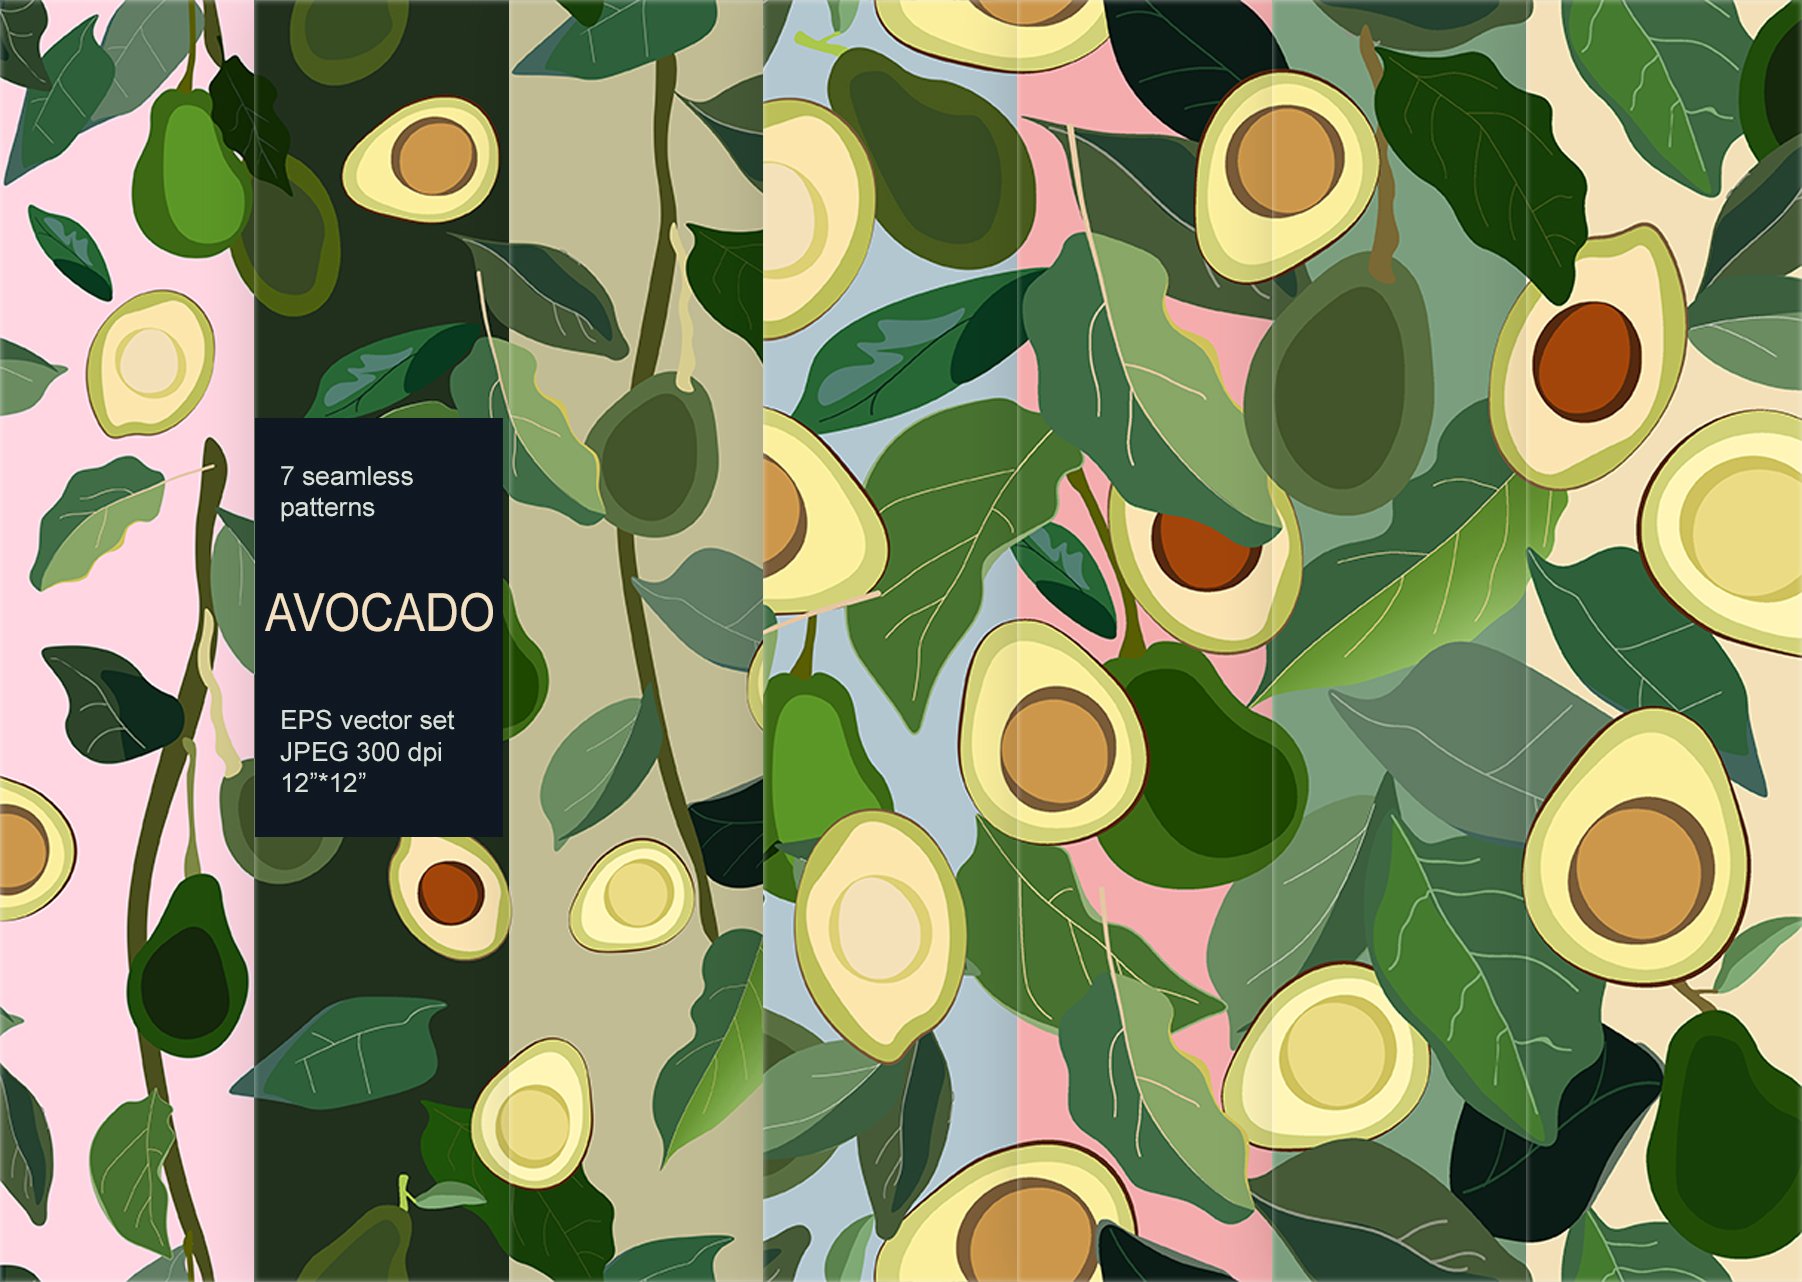 Avocado vector seamless set cover image.